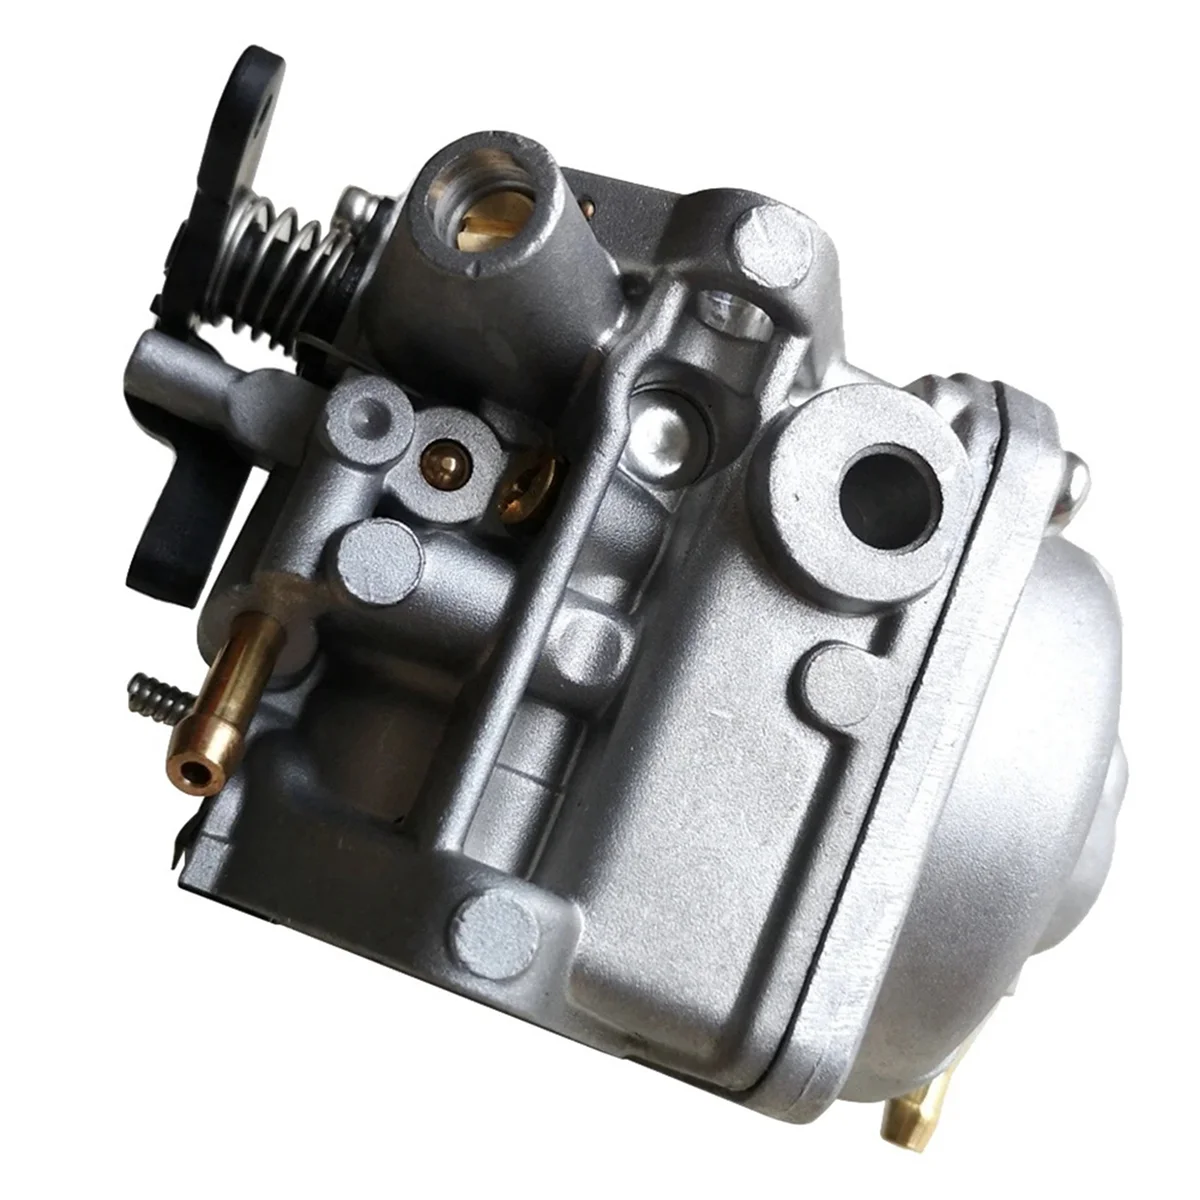 

803522T03 Carburetor Outboard Motor 4T 4/5HP for Tohatsu Mercury MF3.5 MFS4 MFS5 NFS4 4 Stroke 3R1-03200-1